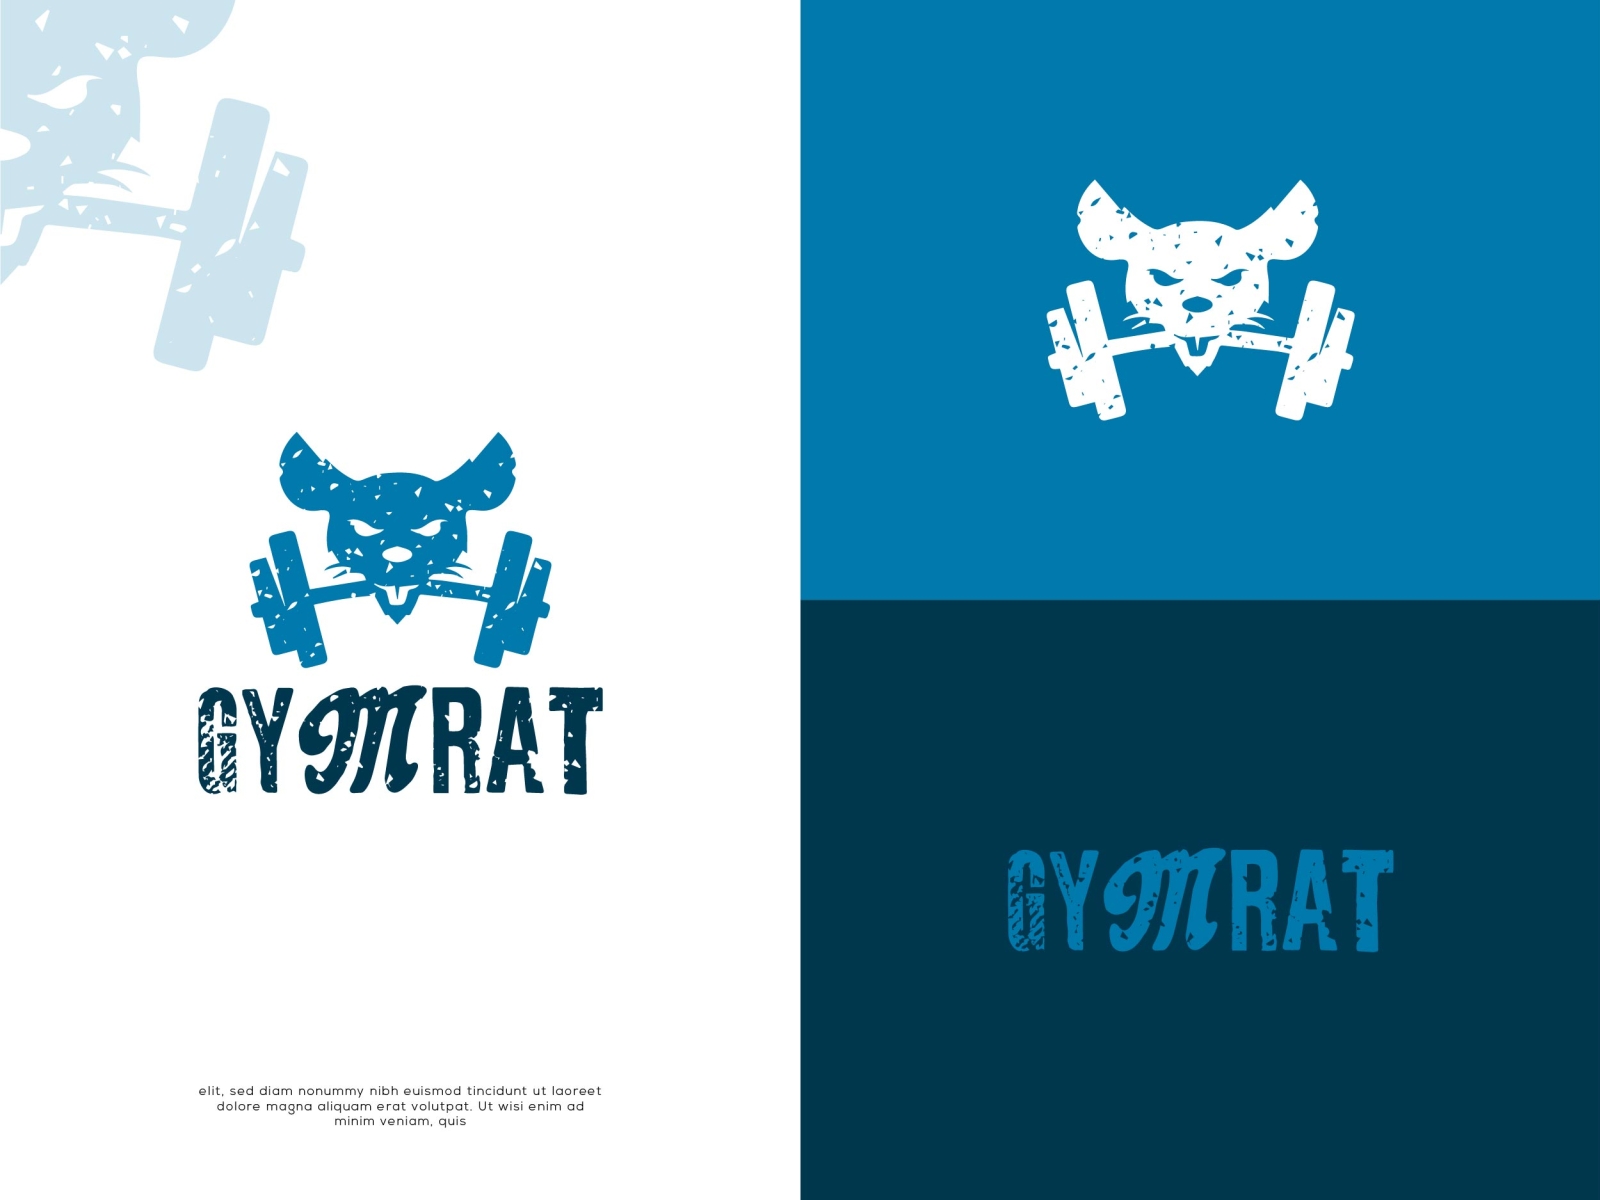 Gym Rat - Logo Design by Shoaib Hashmi on Dribbble